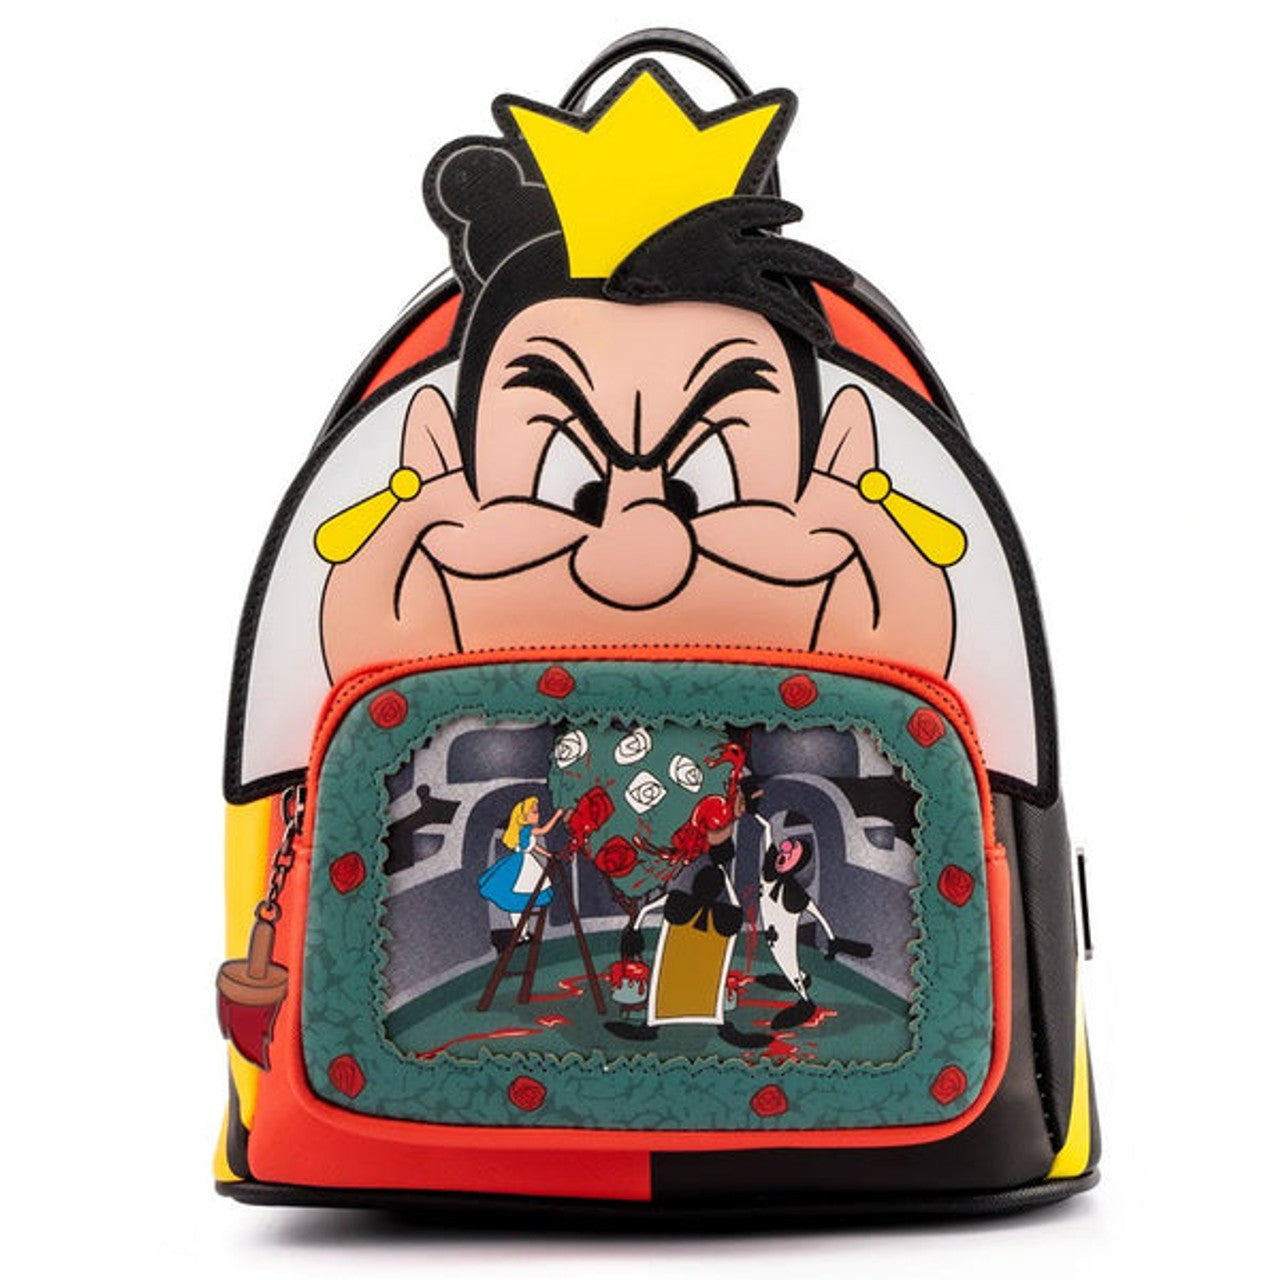 Loungefly Disney Villain Scenes Queen of Hearts Mini Backpack